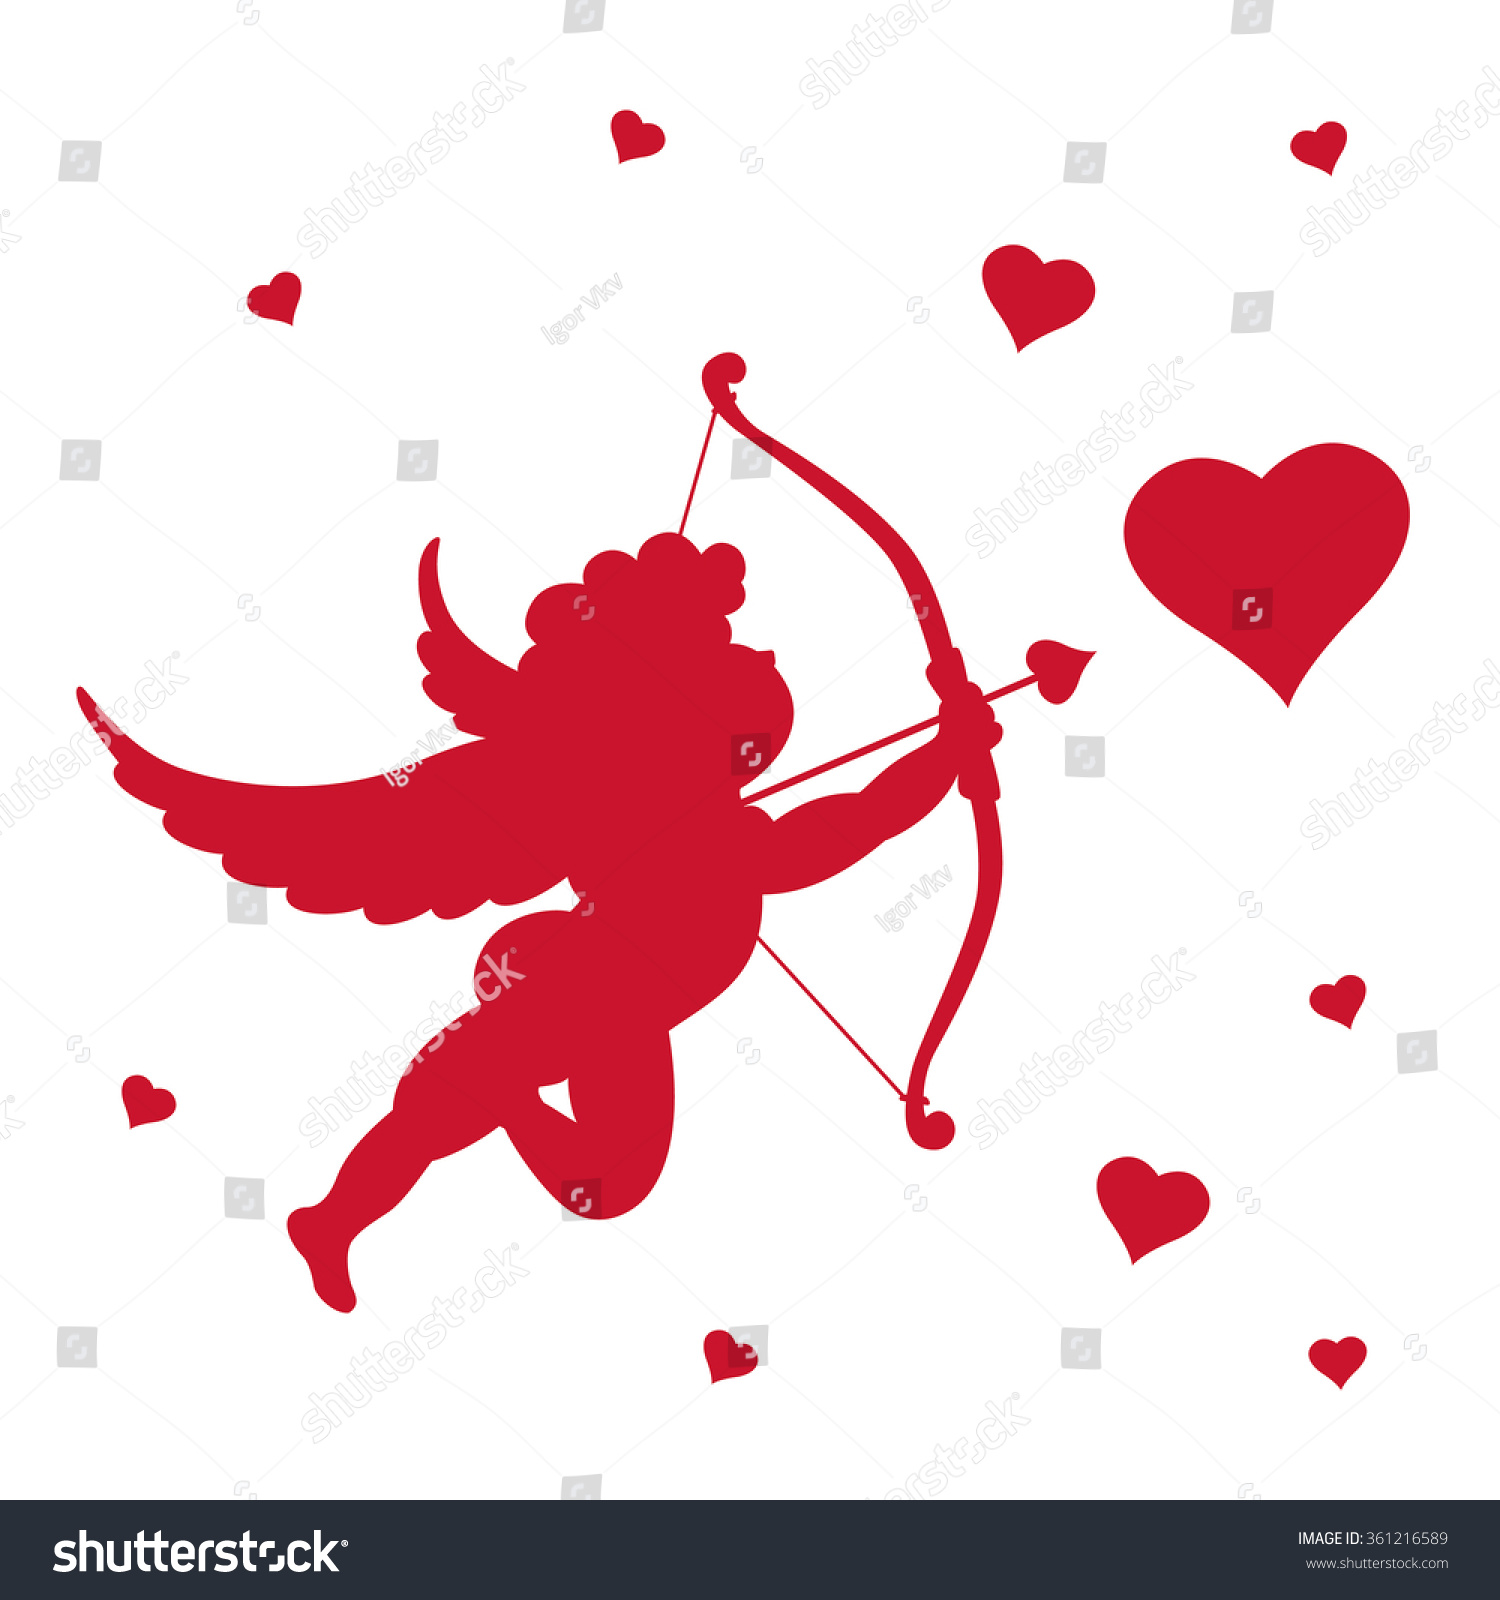 Silhouette Cupid Vector Illustration Stock Vector Royalty Free 361216589 Shutterstock 6199